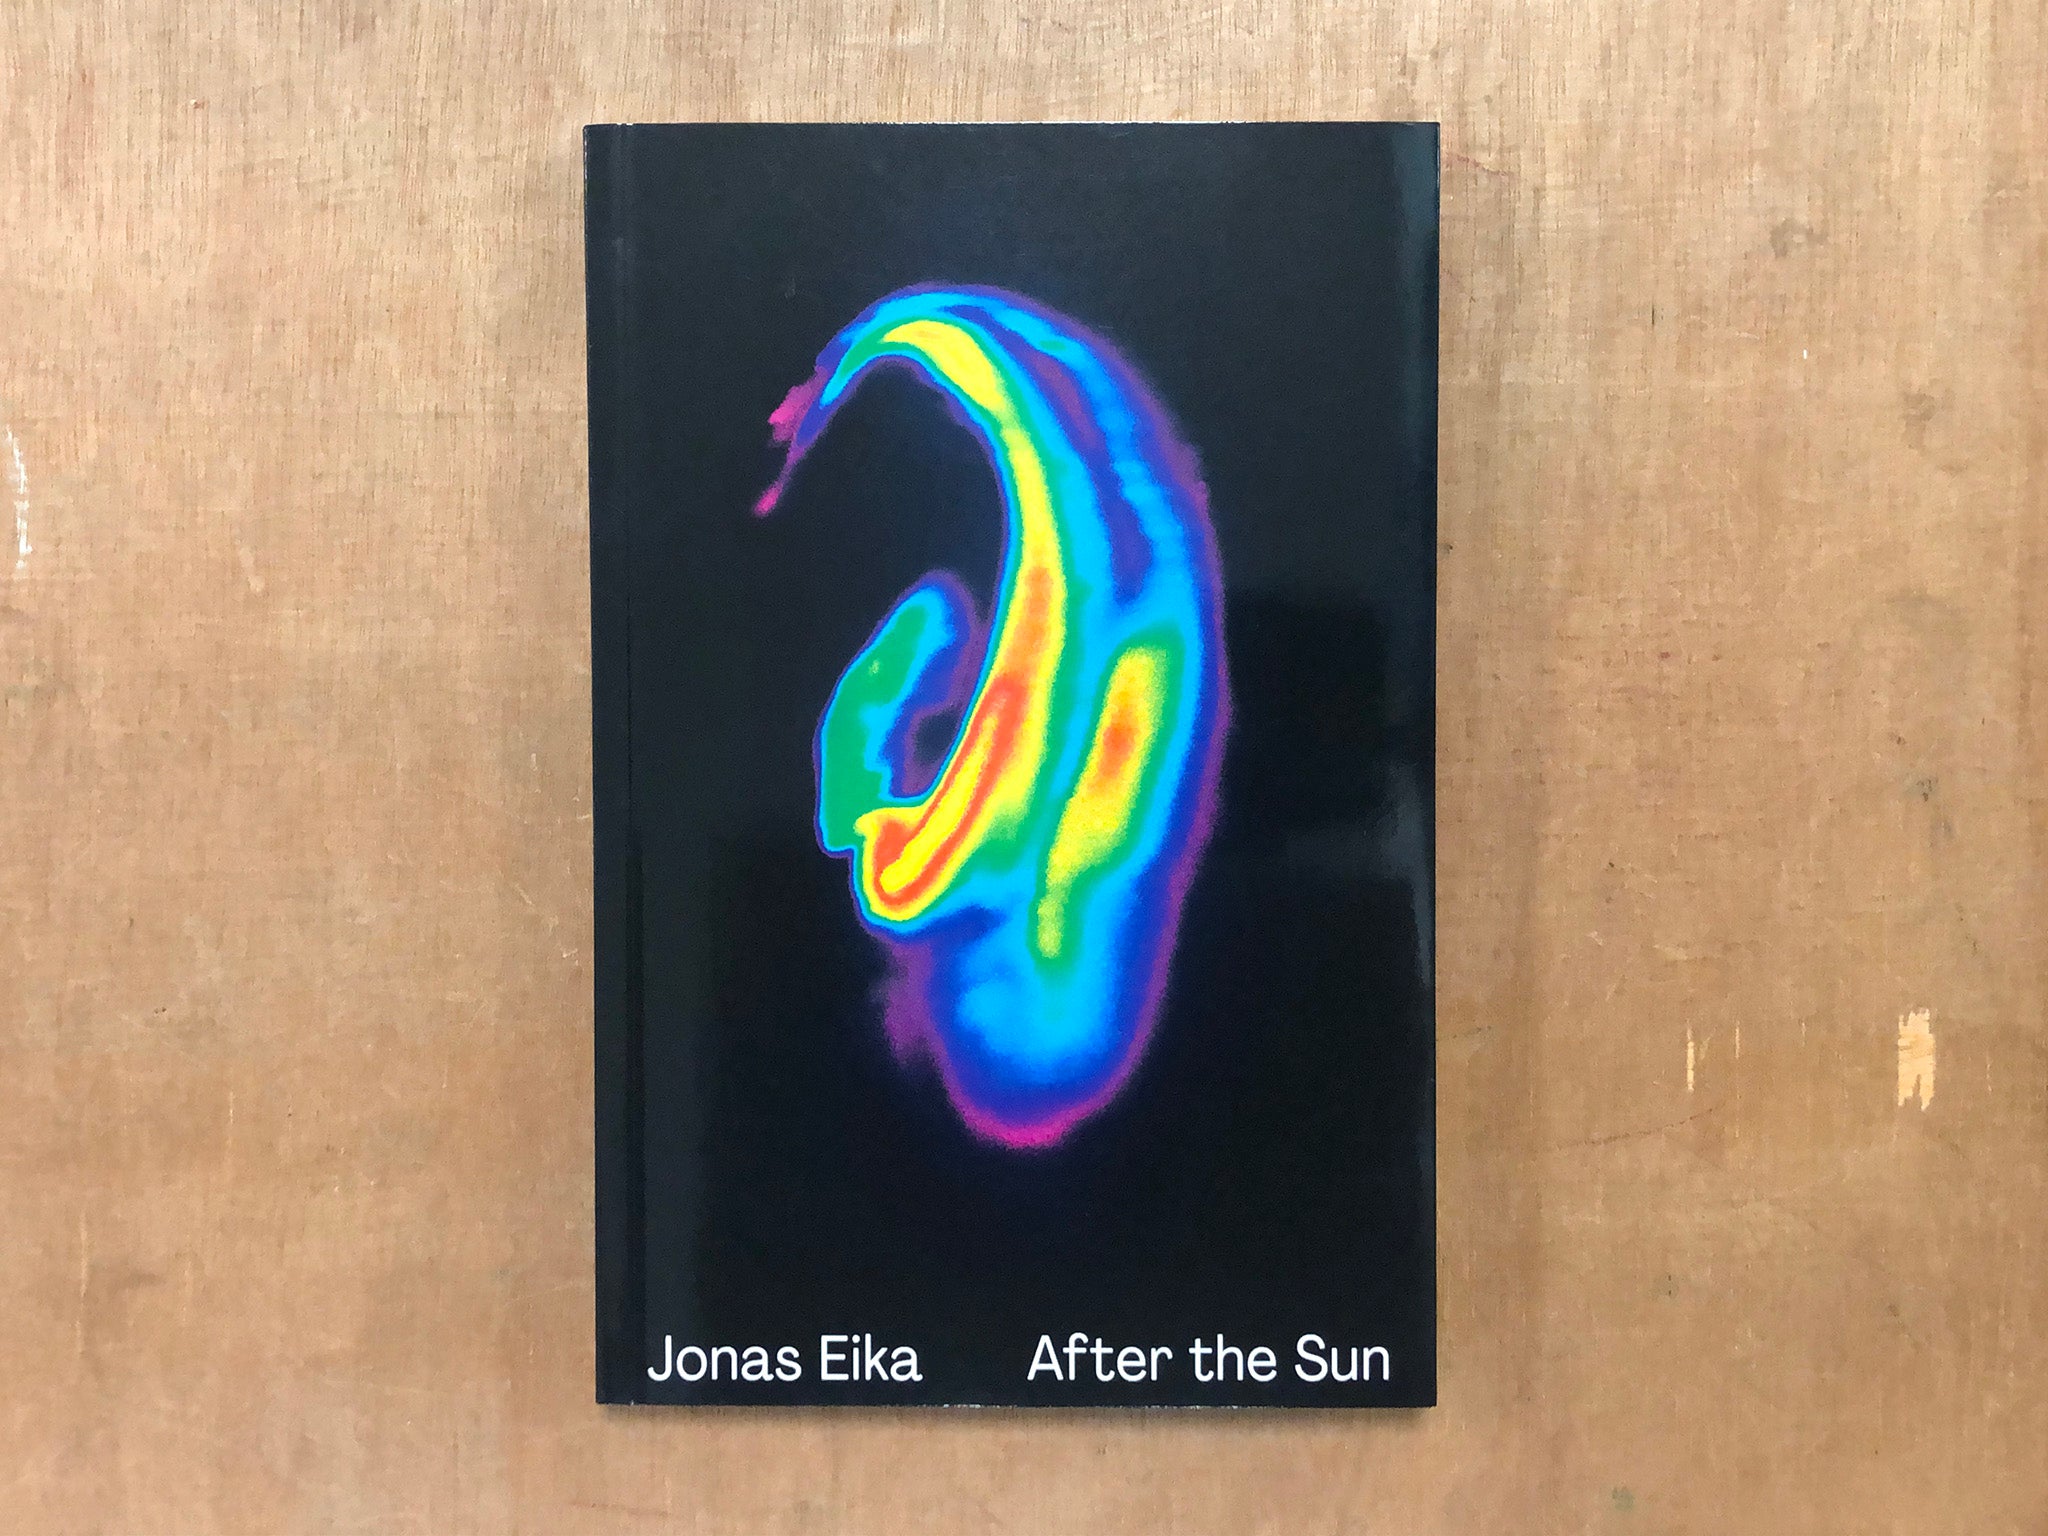 AFTER THE SUN by Jonas Eika